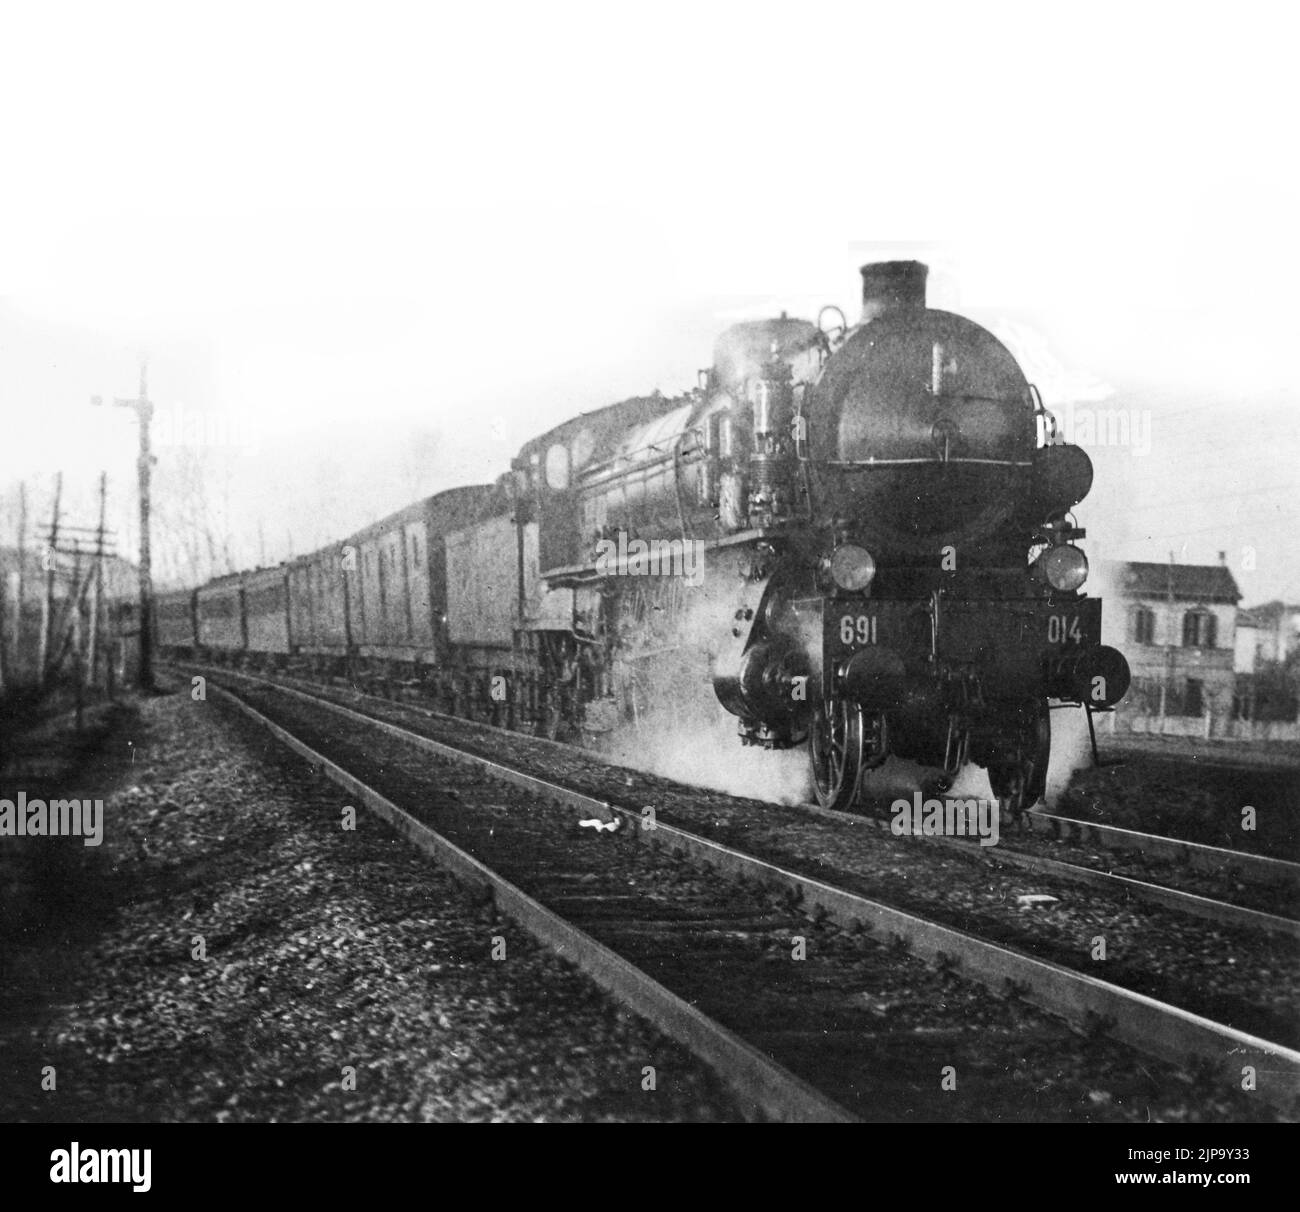 Treni e Tram - Locomotiva Breda Gr. 691-014 (anni 30) Stock Photo